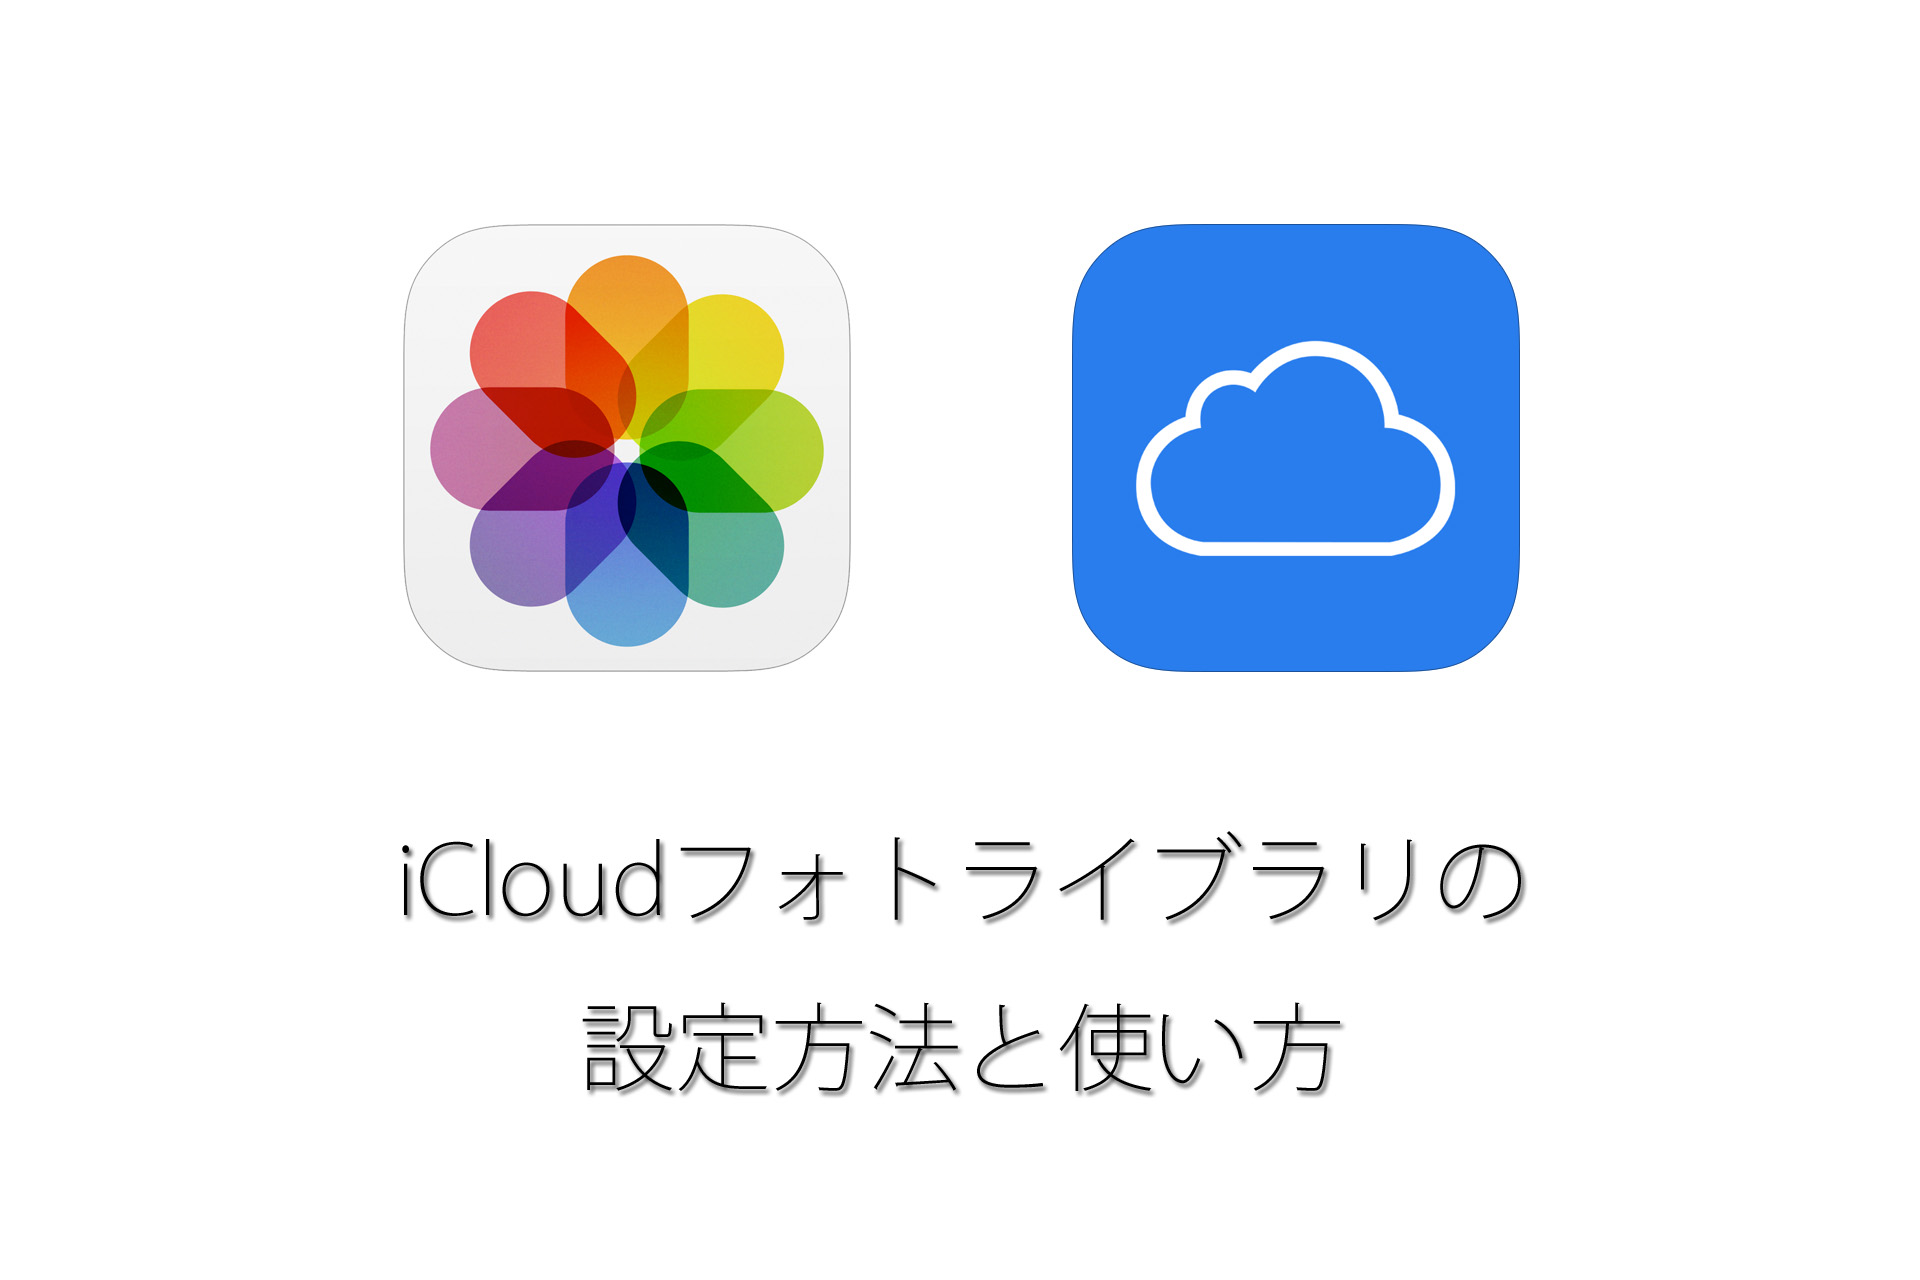 [iOS 8.1の新機能]iCloudフォトライブラリの設定方法と使い方を紹介